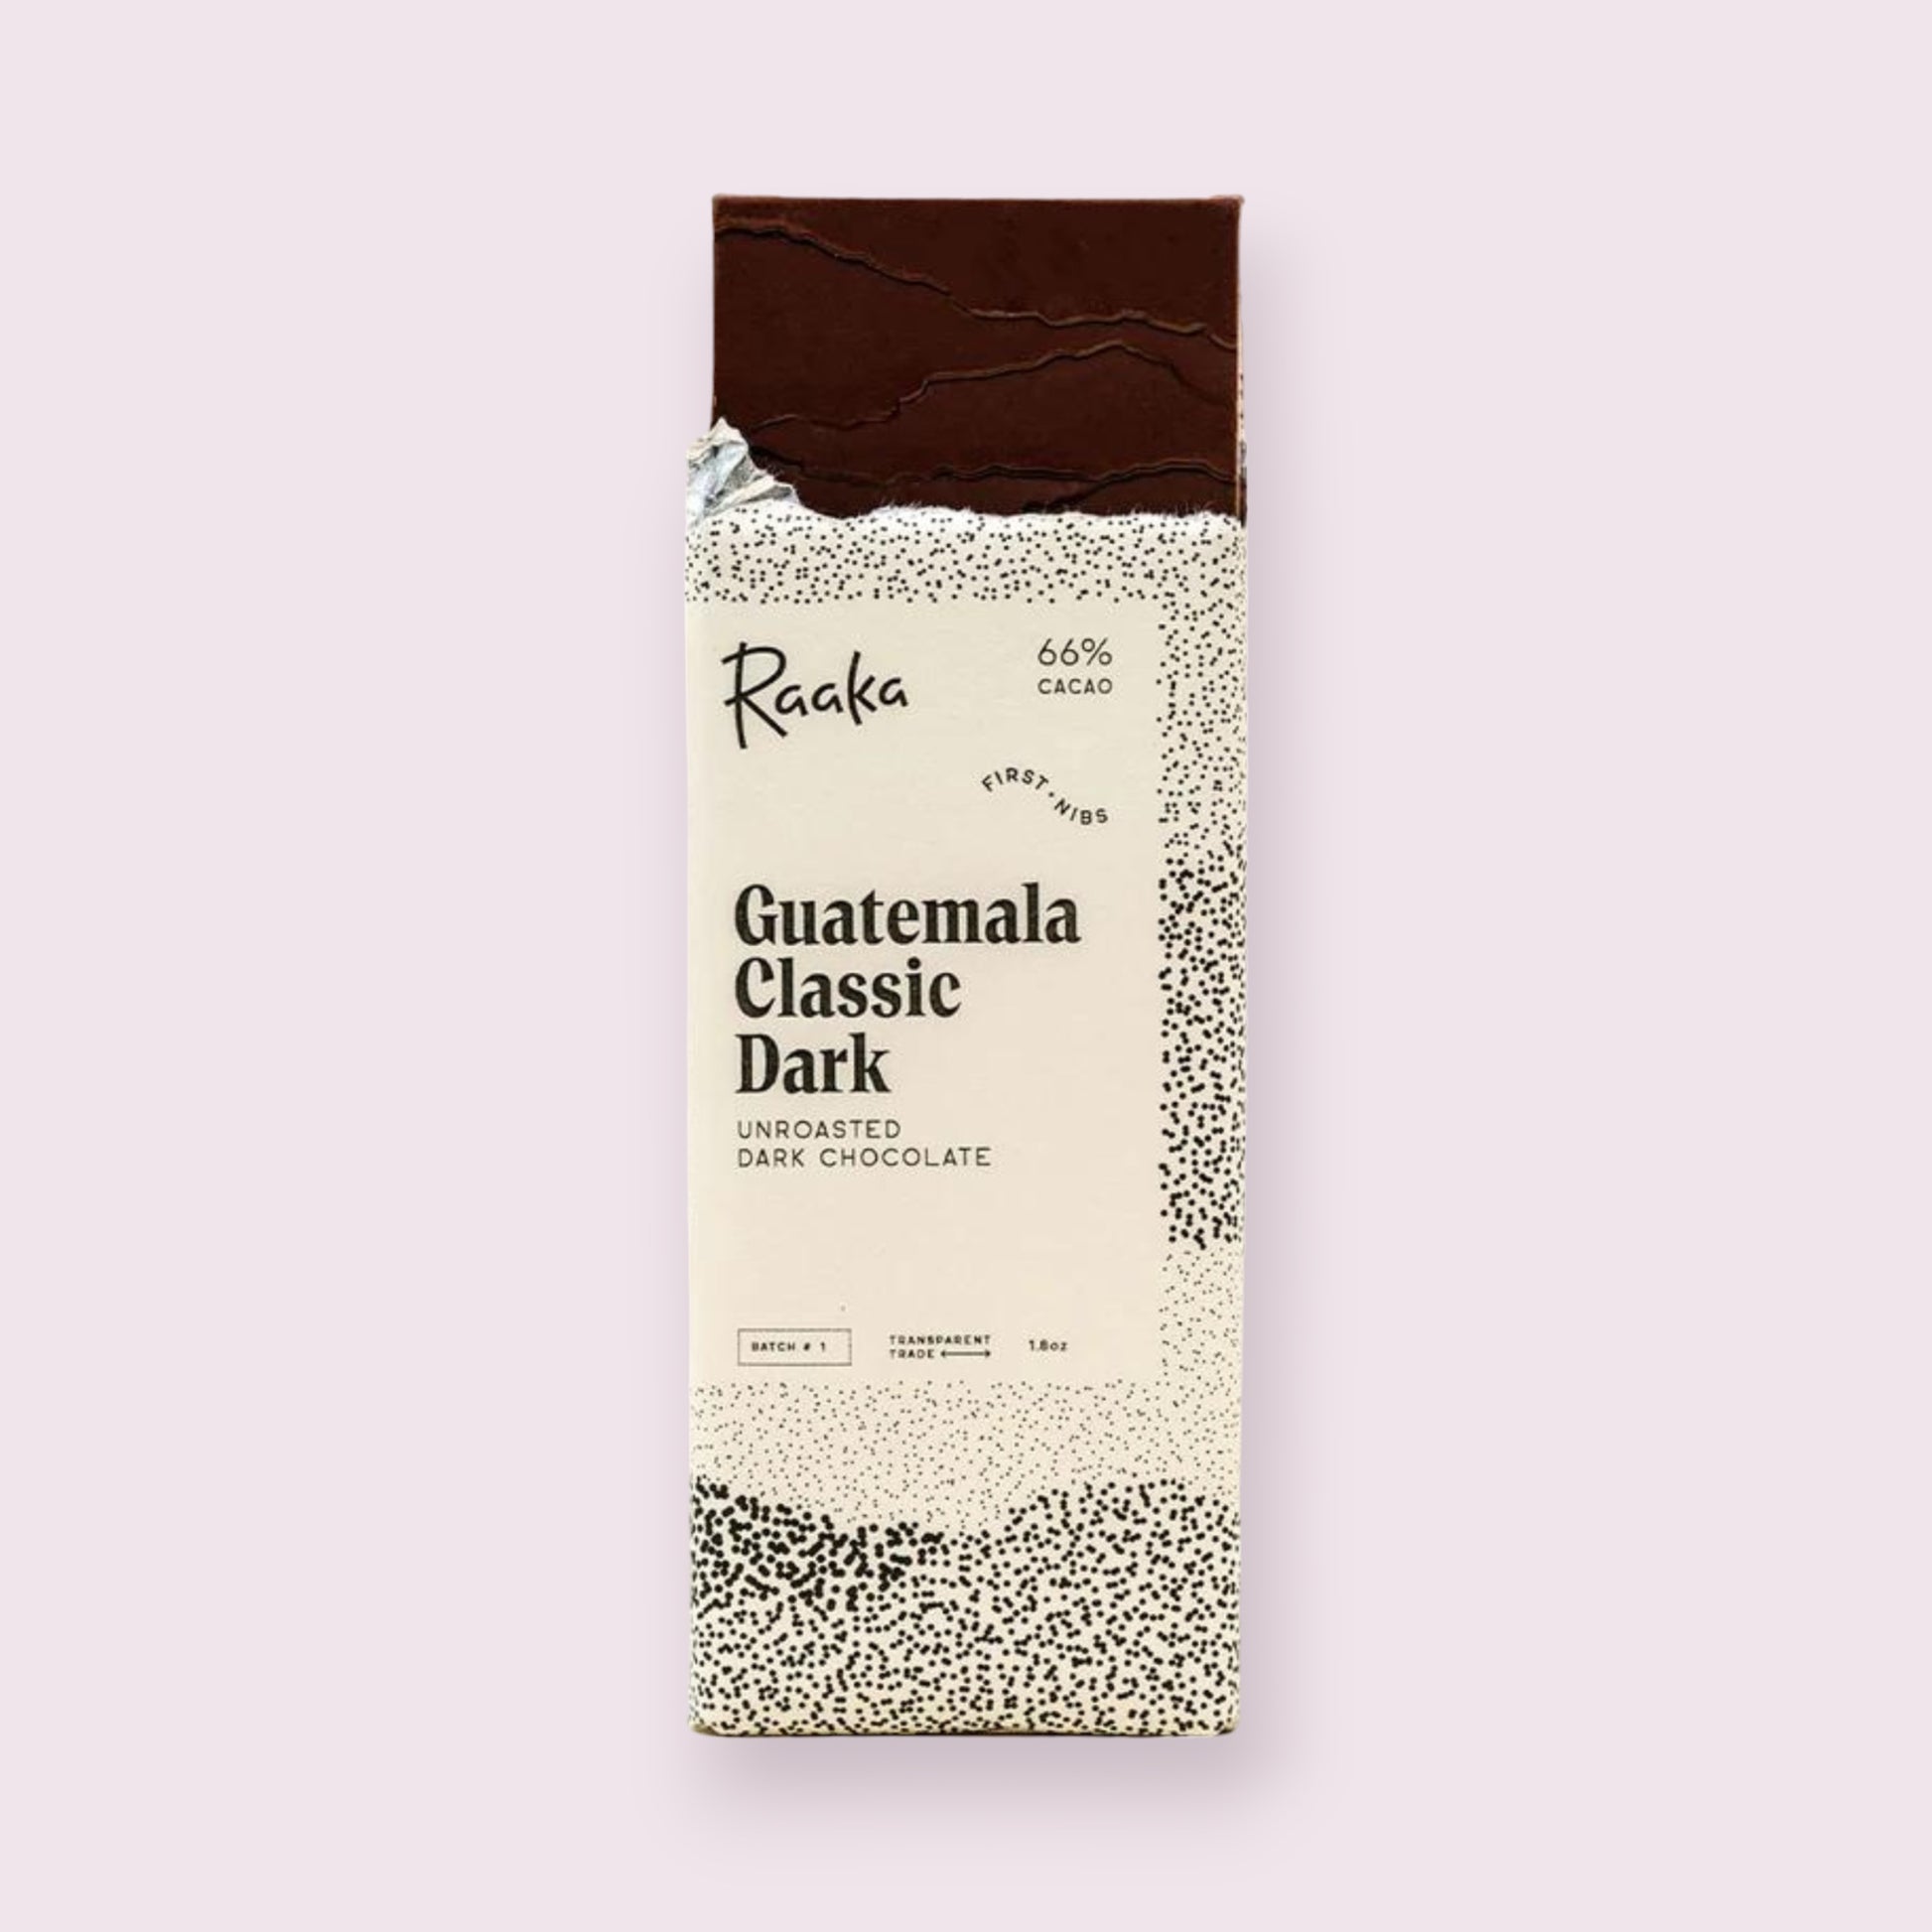 Raaka Guatemala Classic Dark Chocolate Bar  Pixie Candy Shoppe   